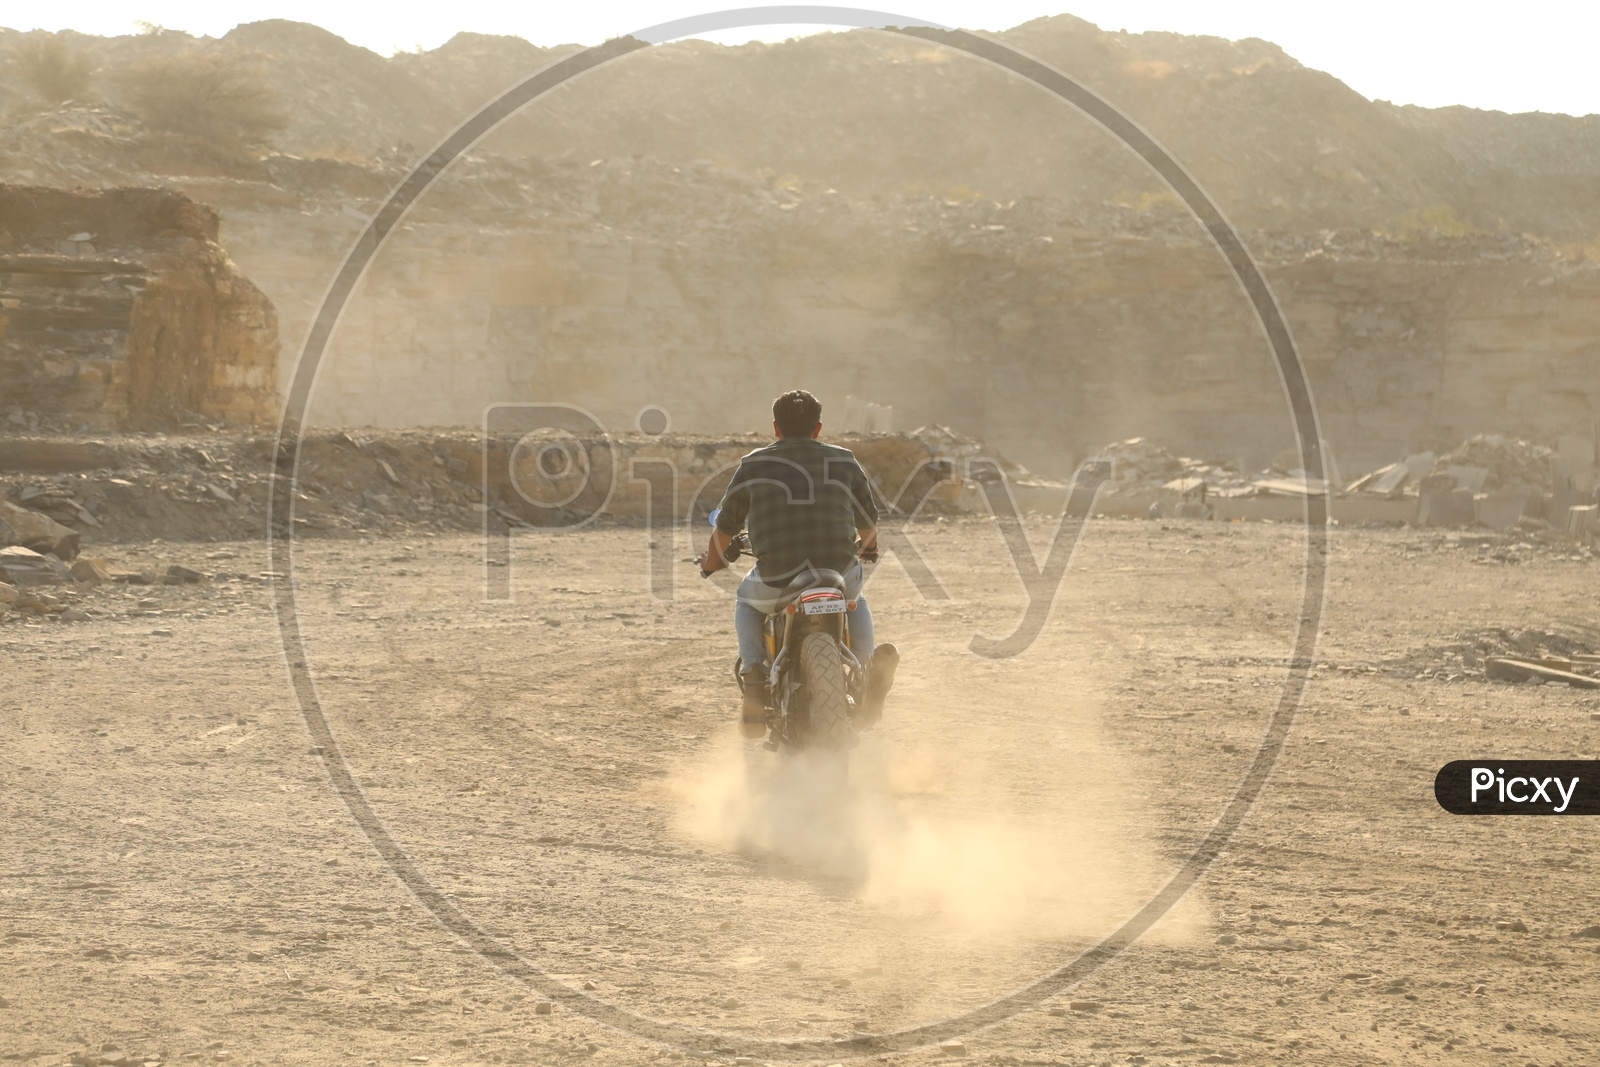 A man riding a bike in a barren land